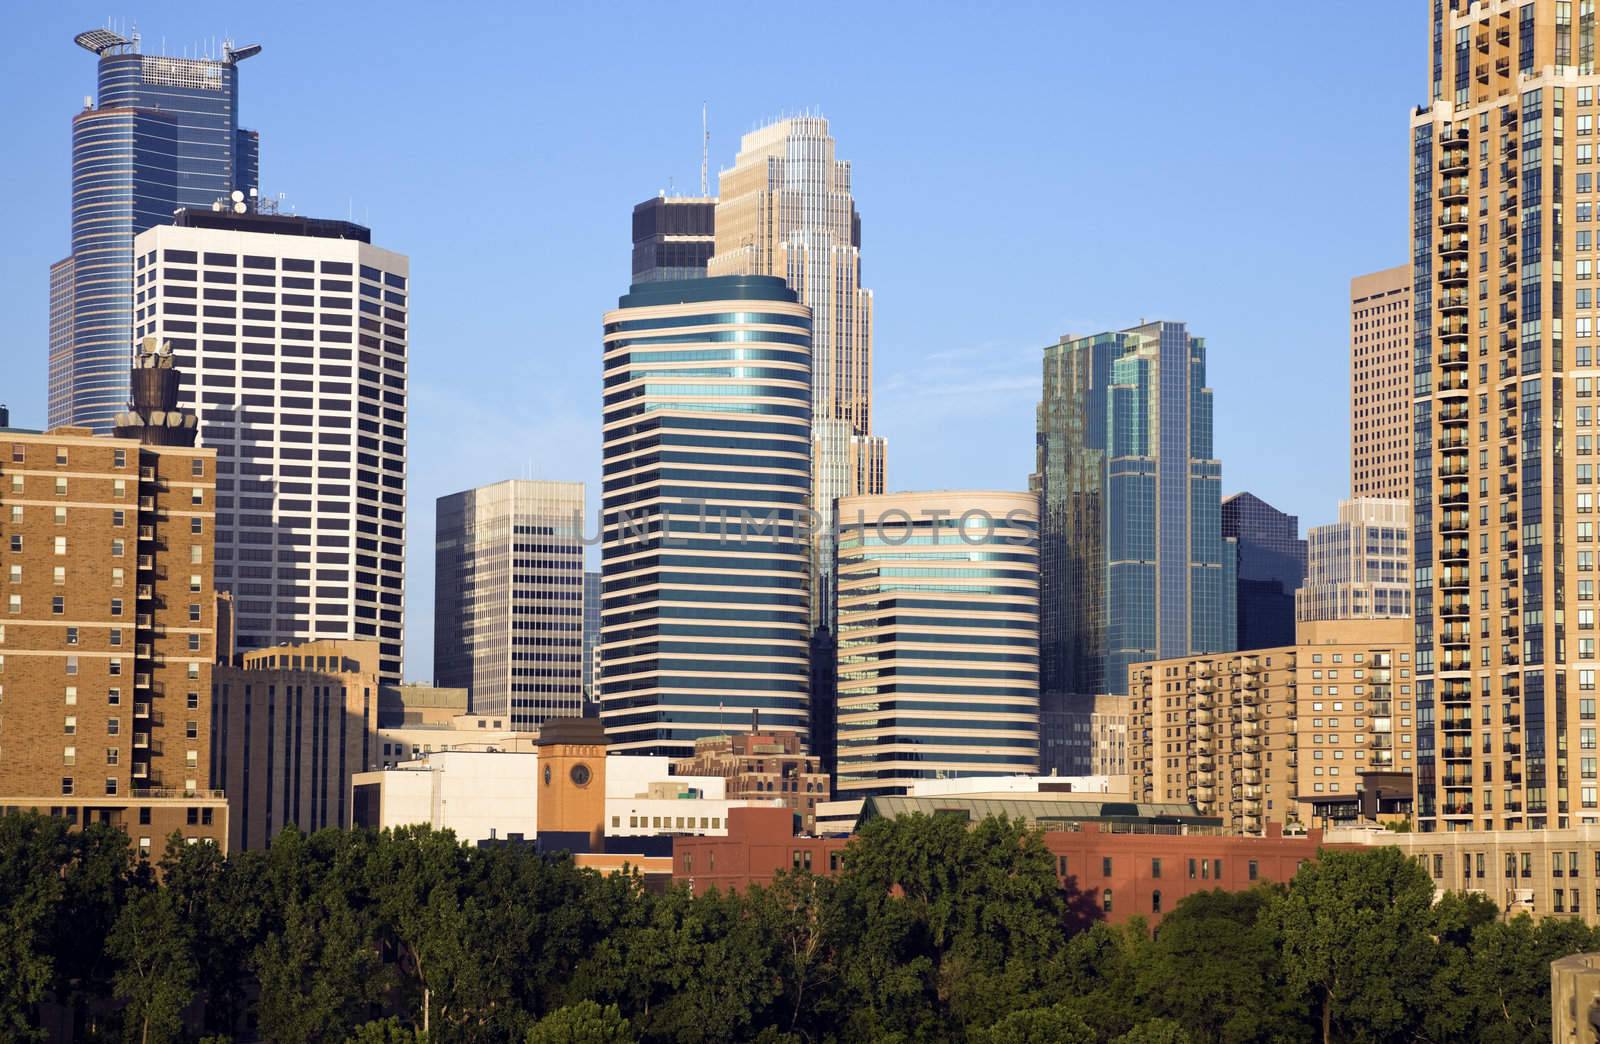 Modern Downtown of Minneapolis by benkrut